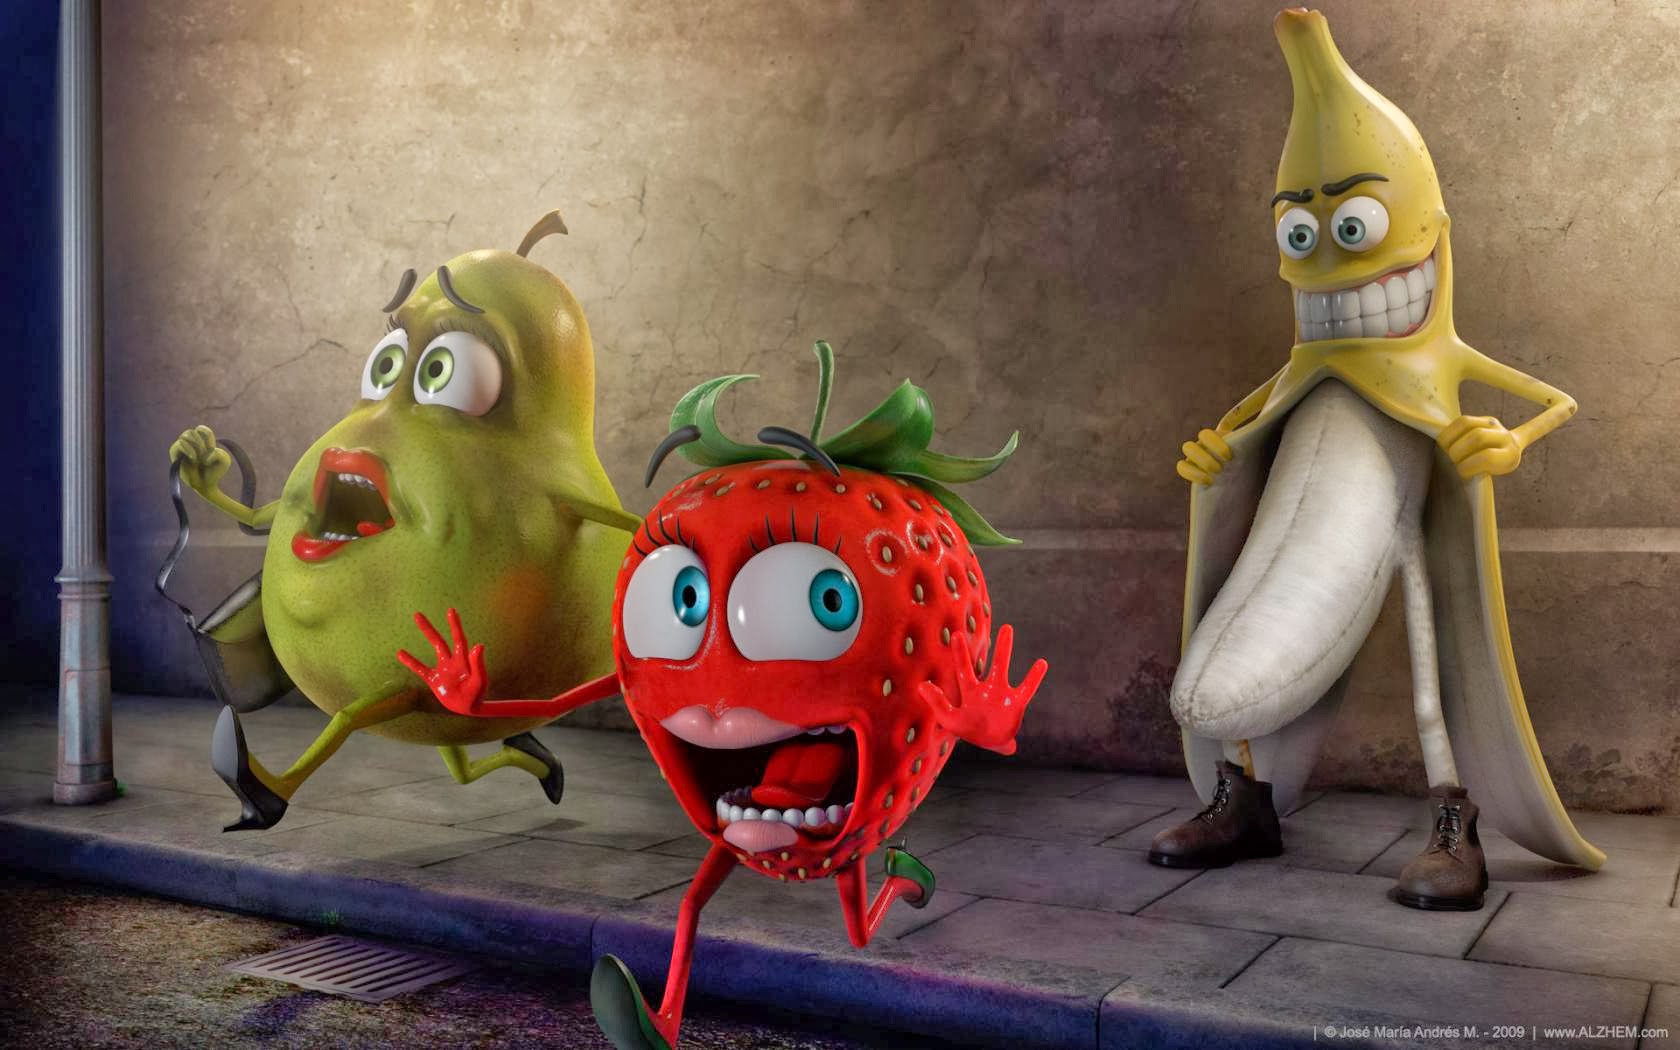 Free download Funny Banana Wallpaper Laugh and shares photos